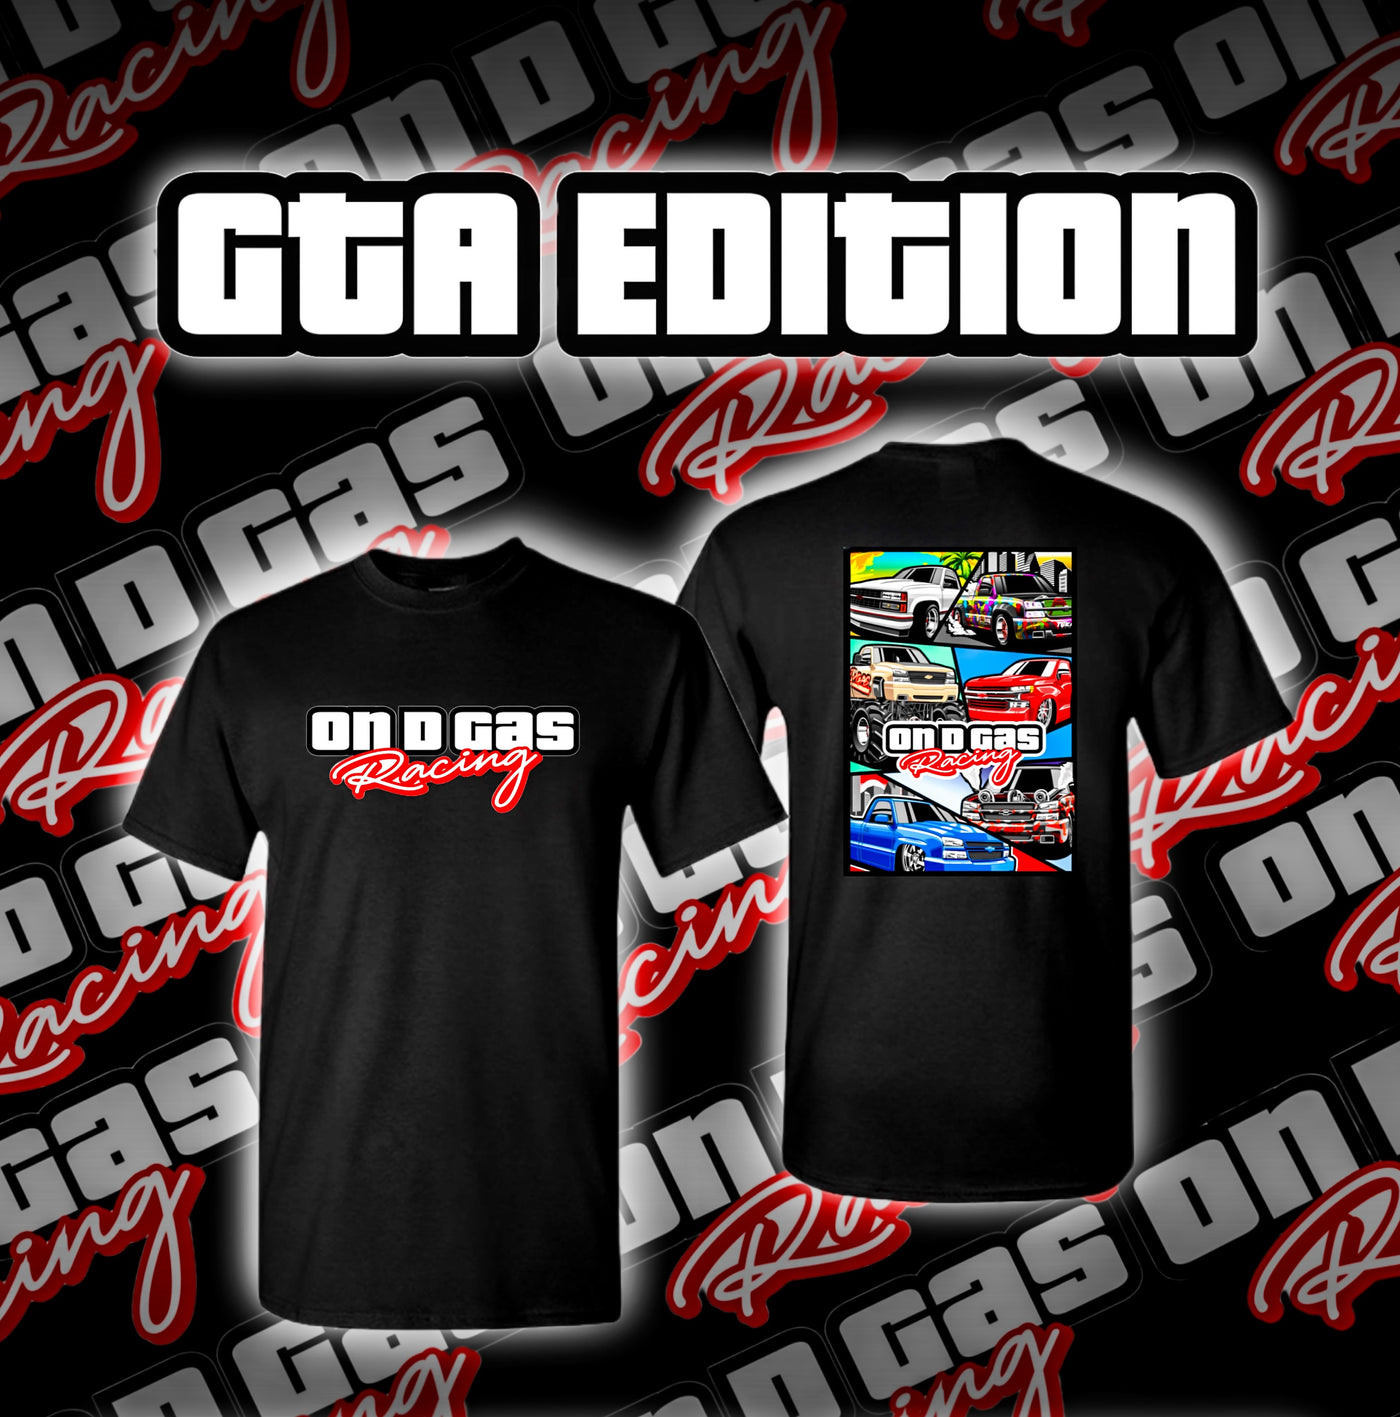 Grand Theft Auto ONDGAS Shirt